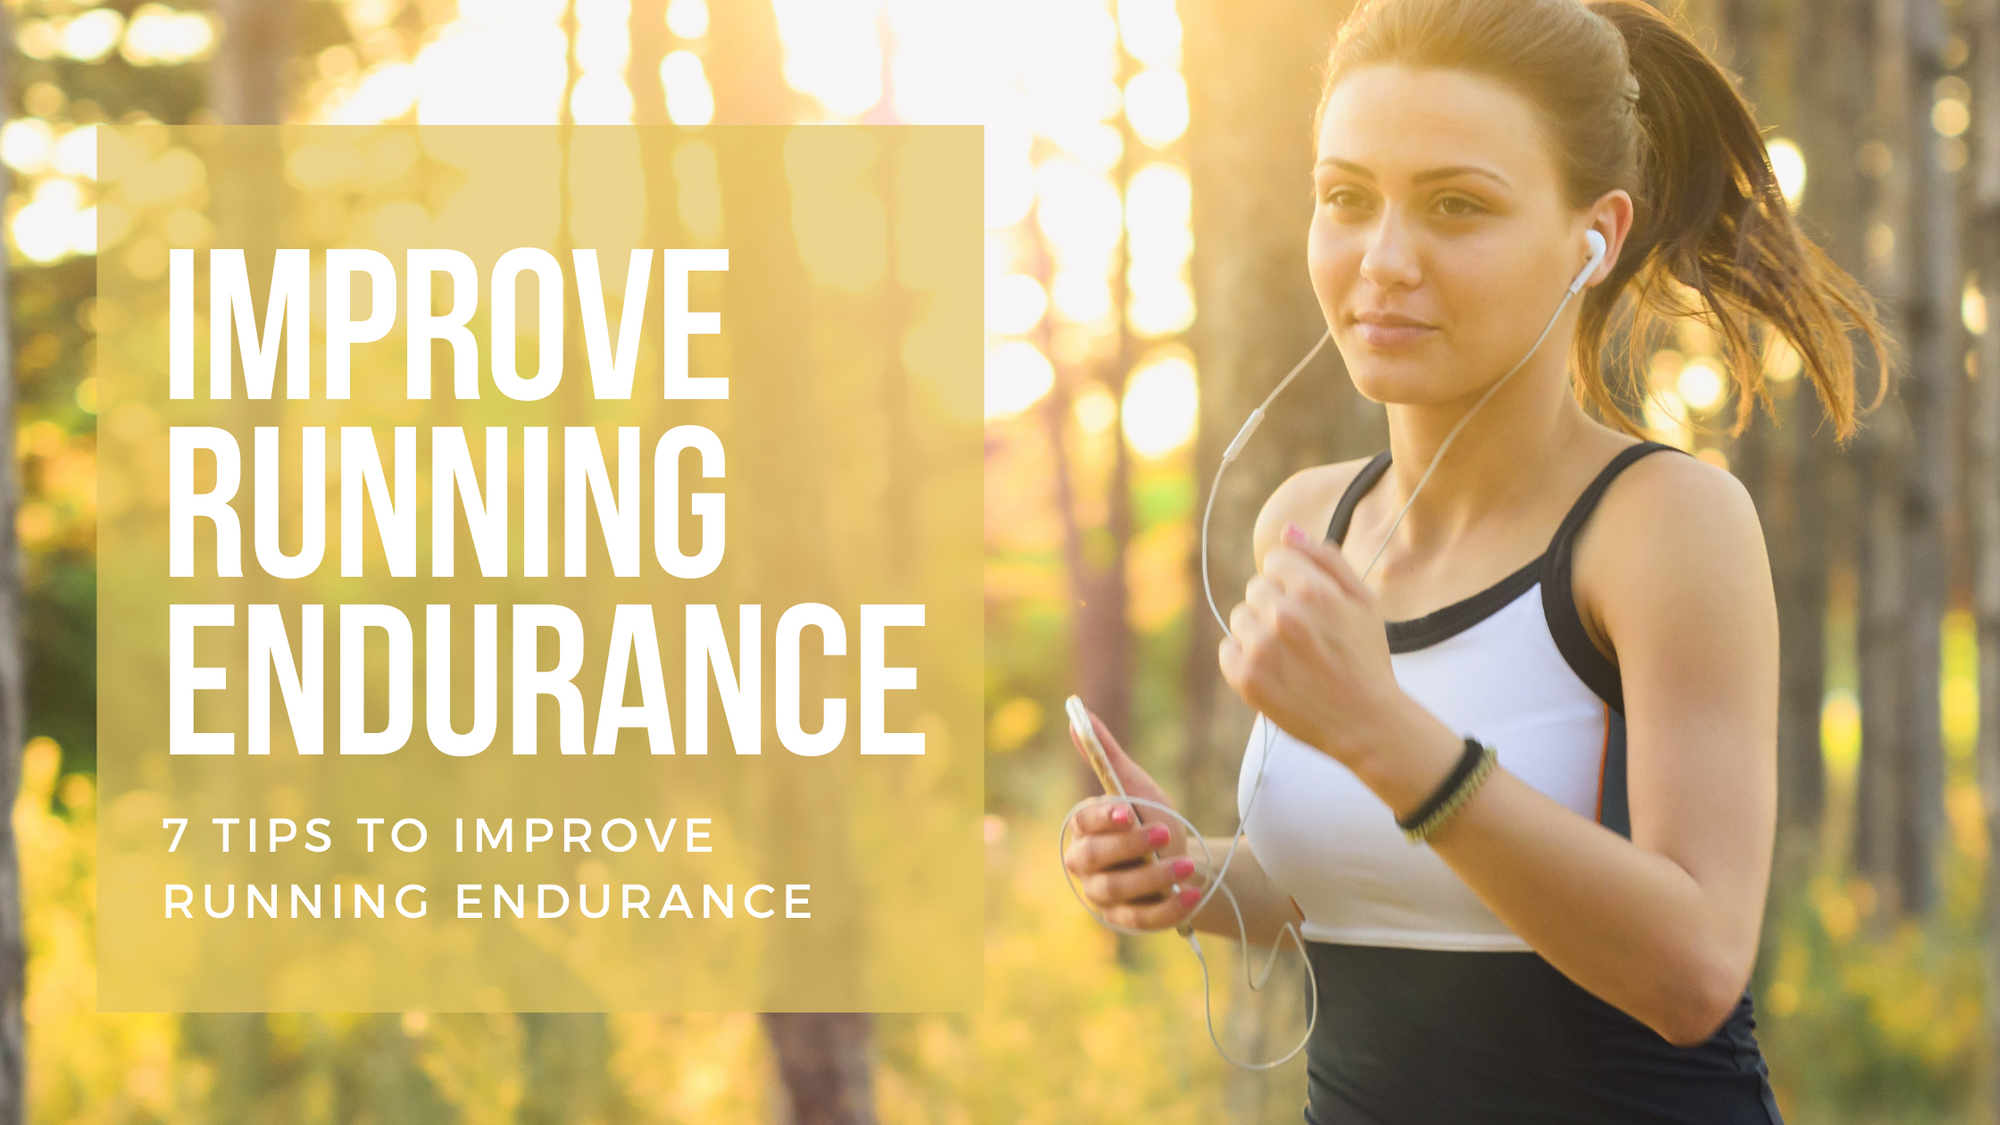 Improve running endurance